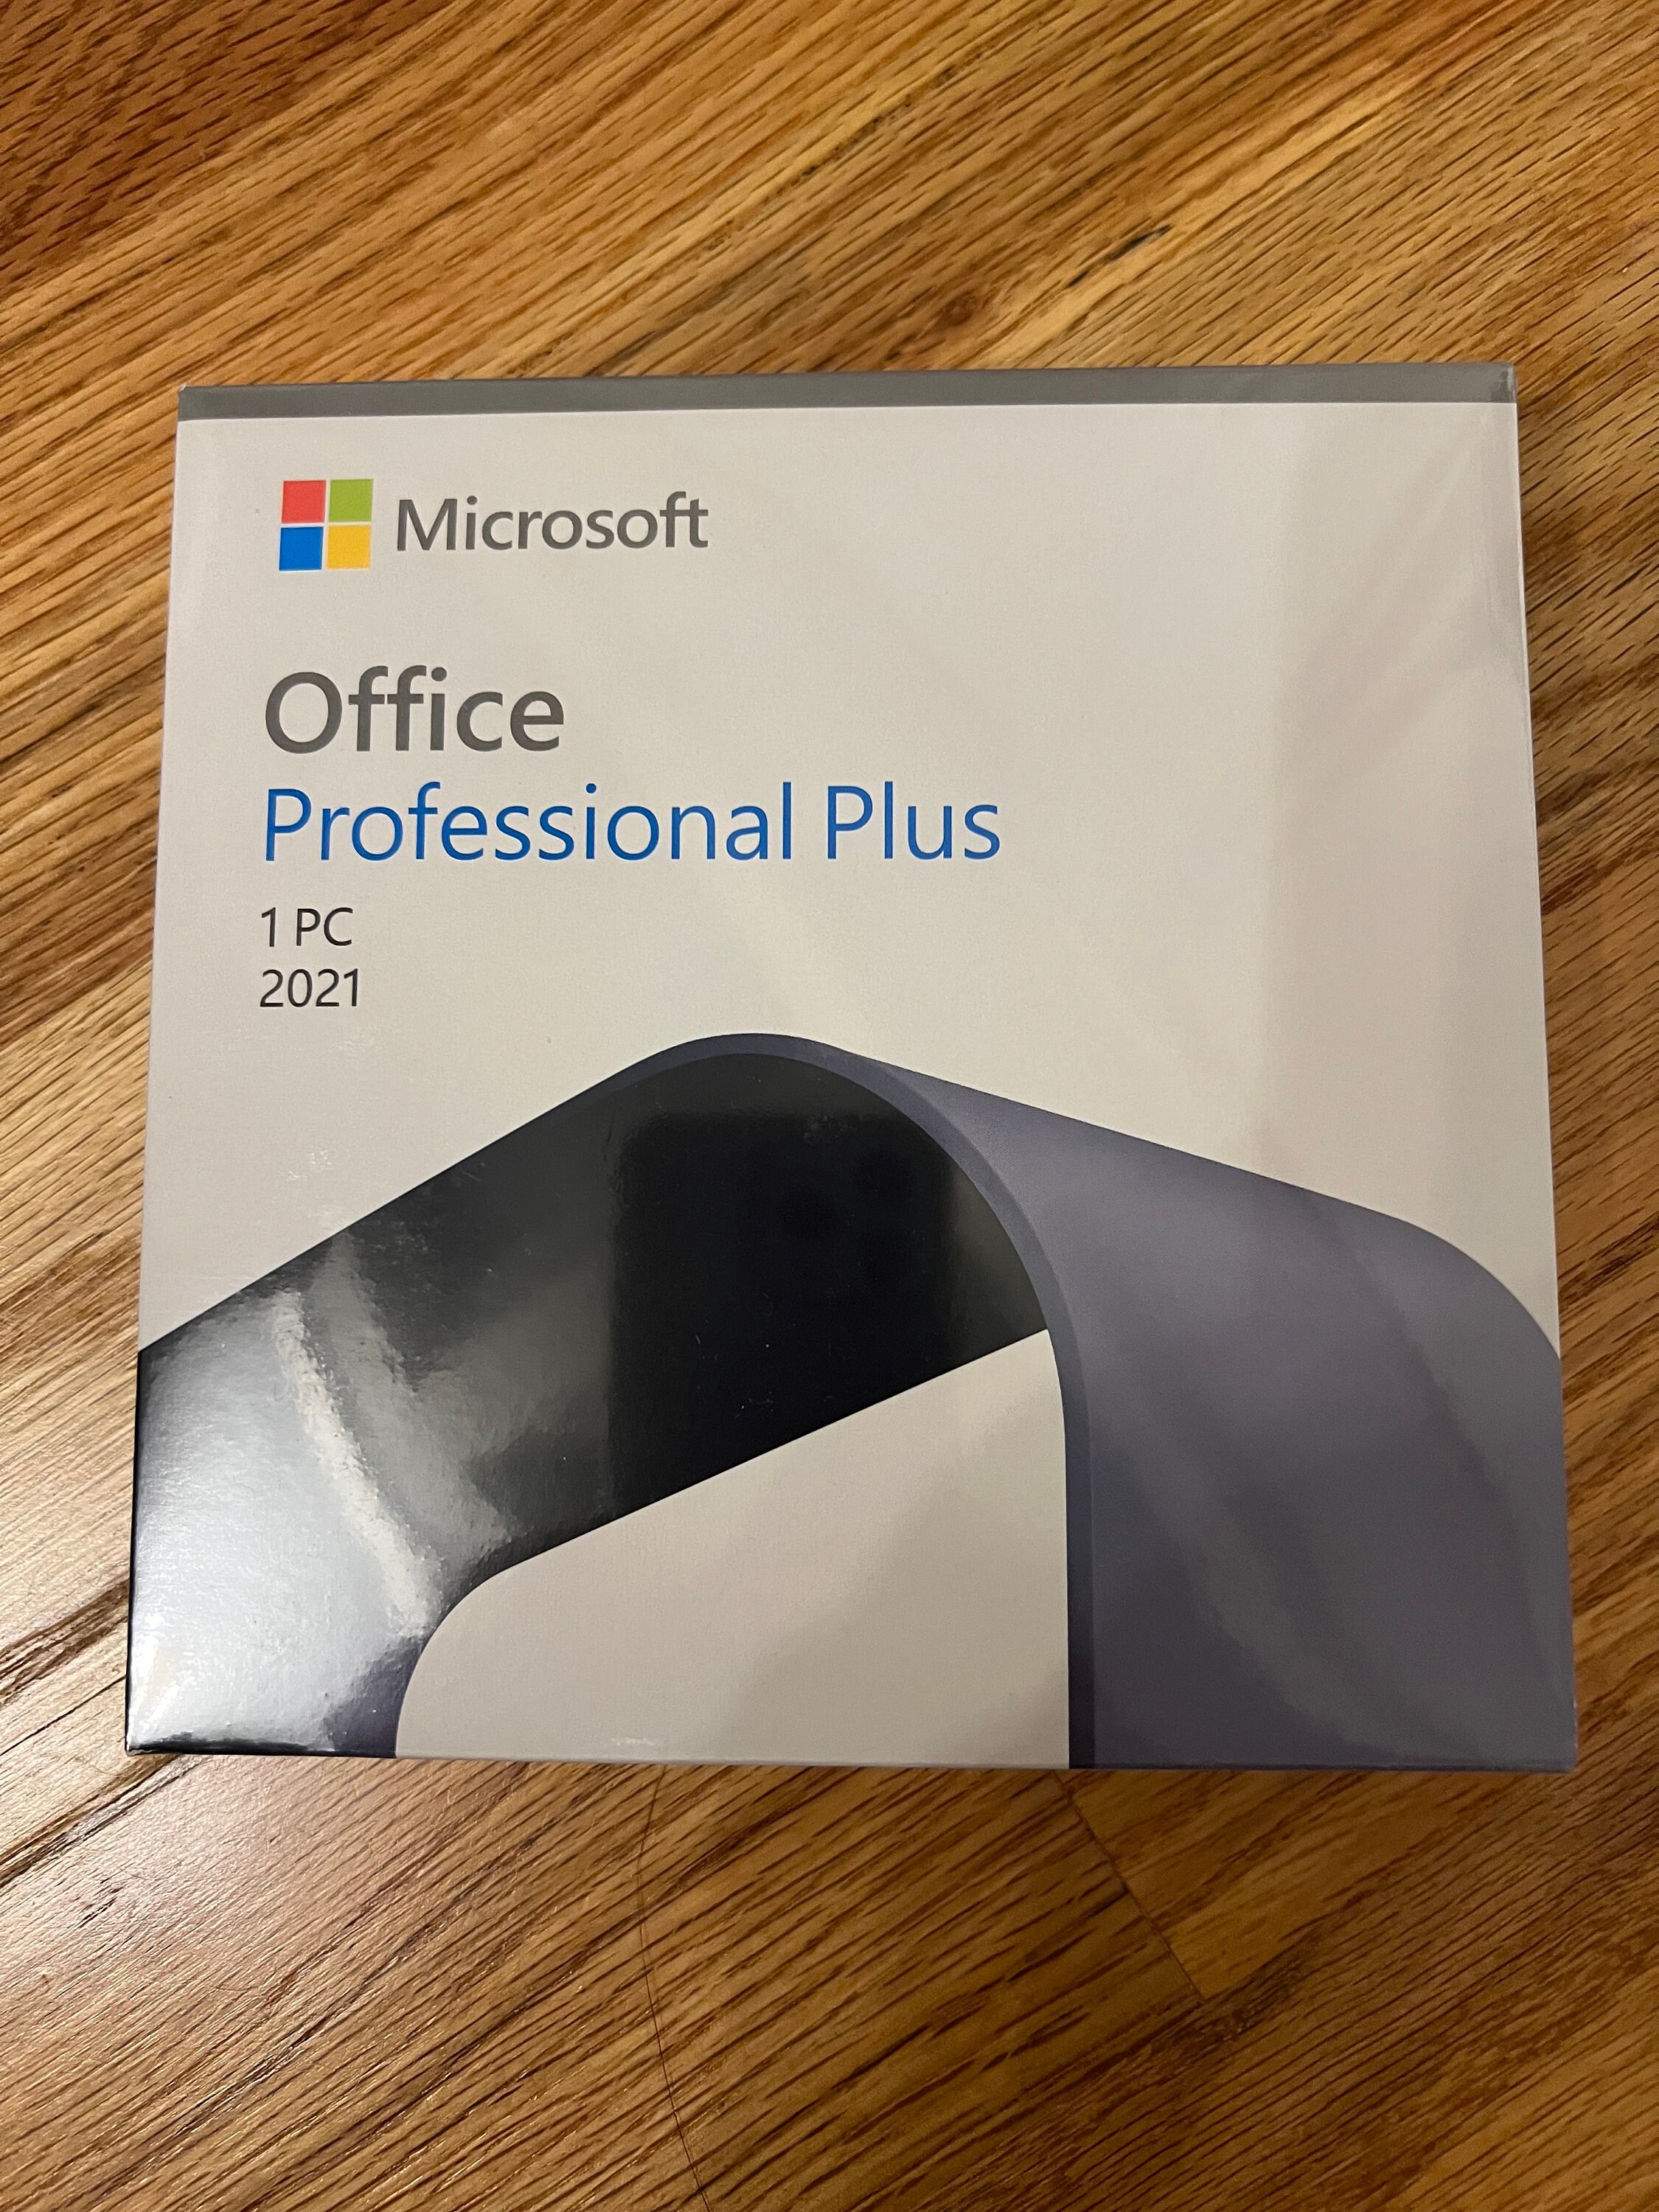 Microsoft Office 2021 Professional Plus 1 PC